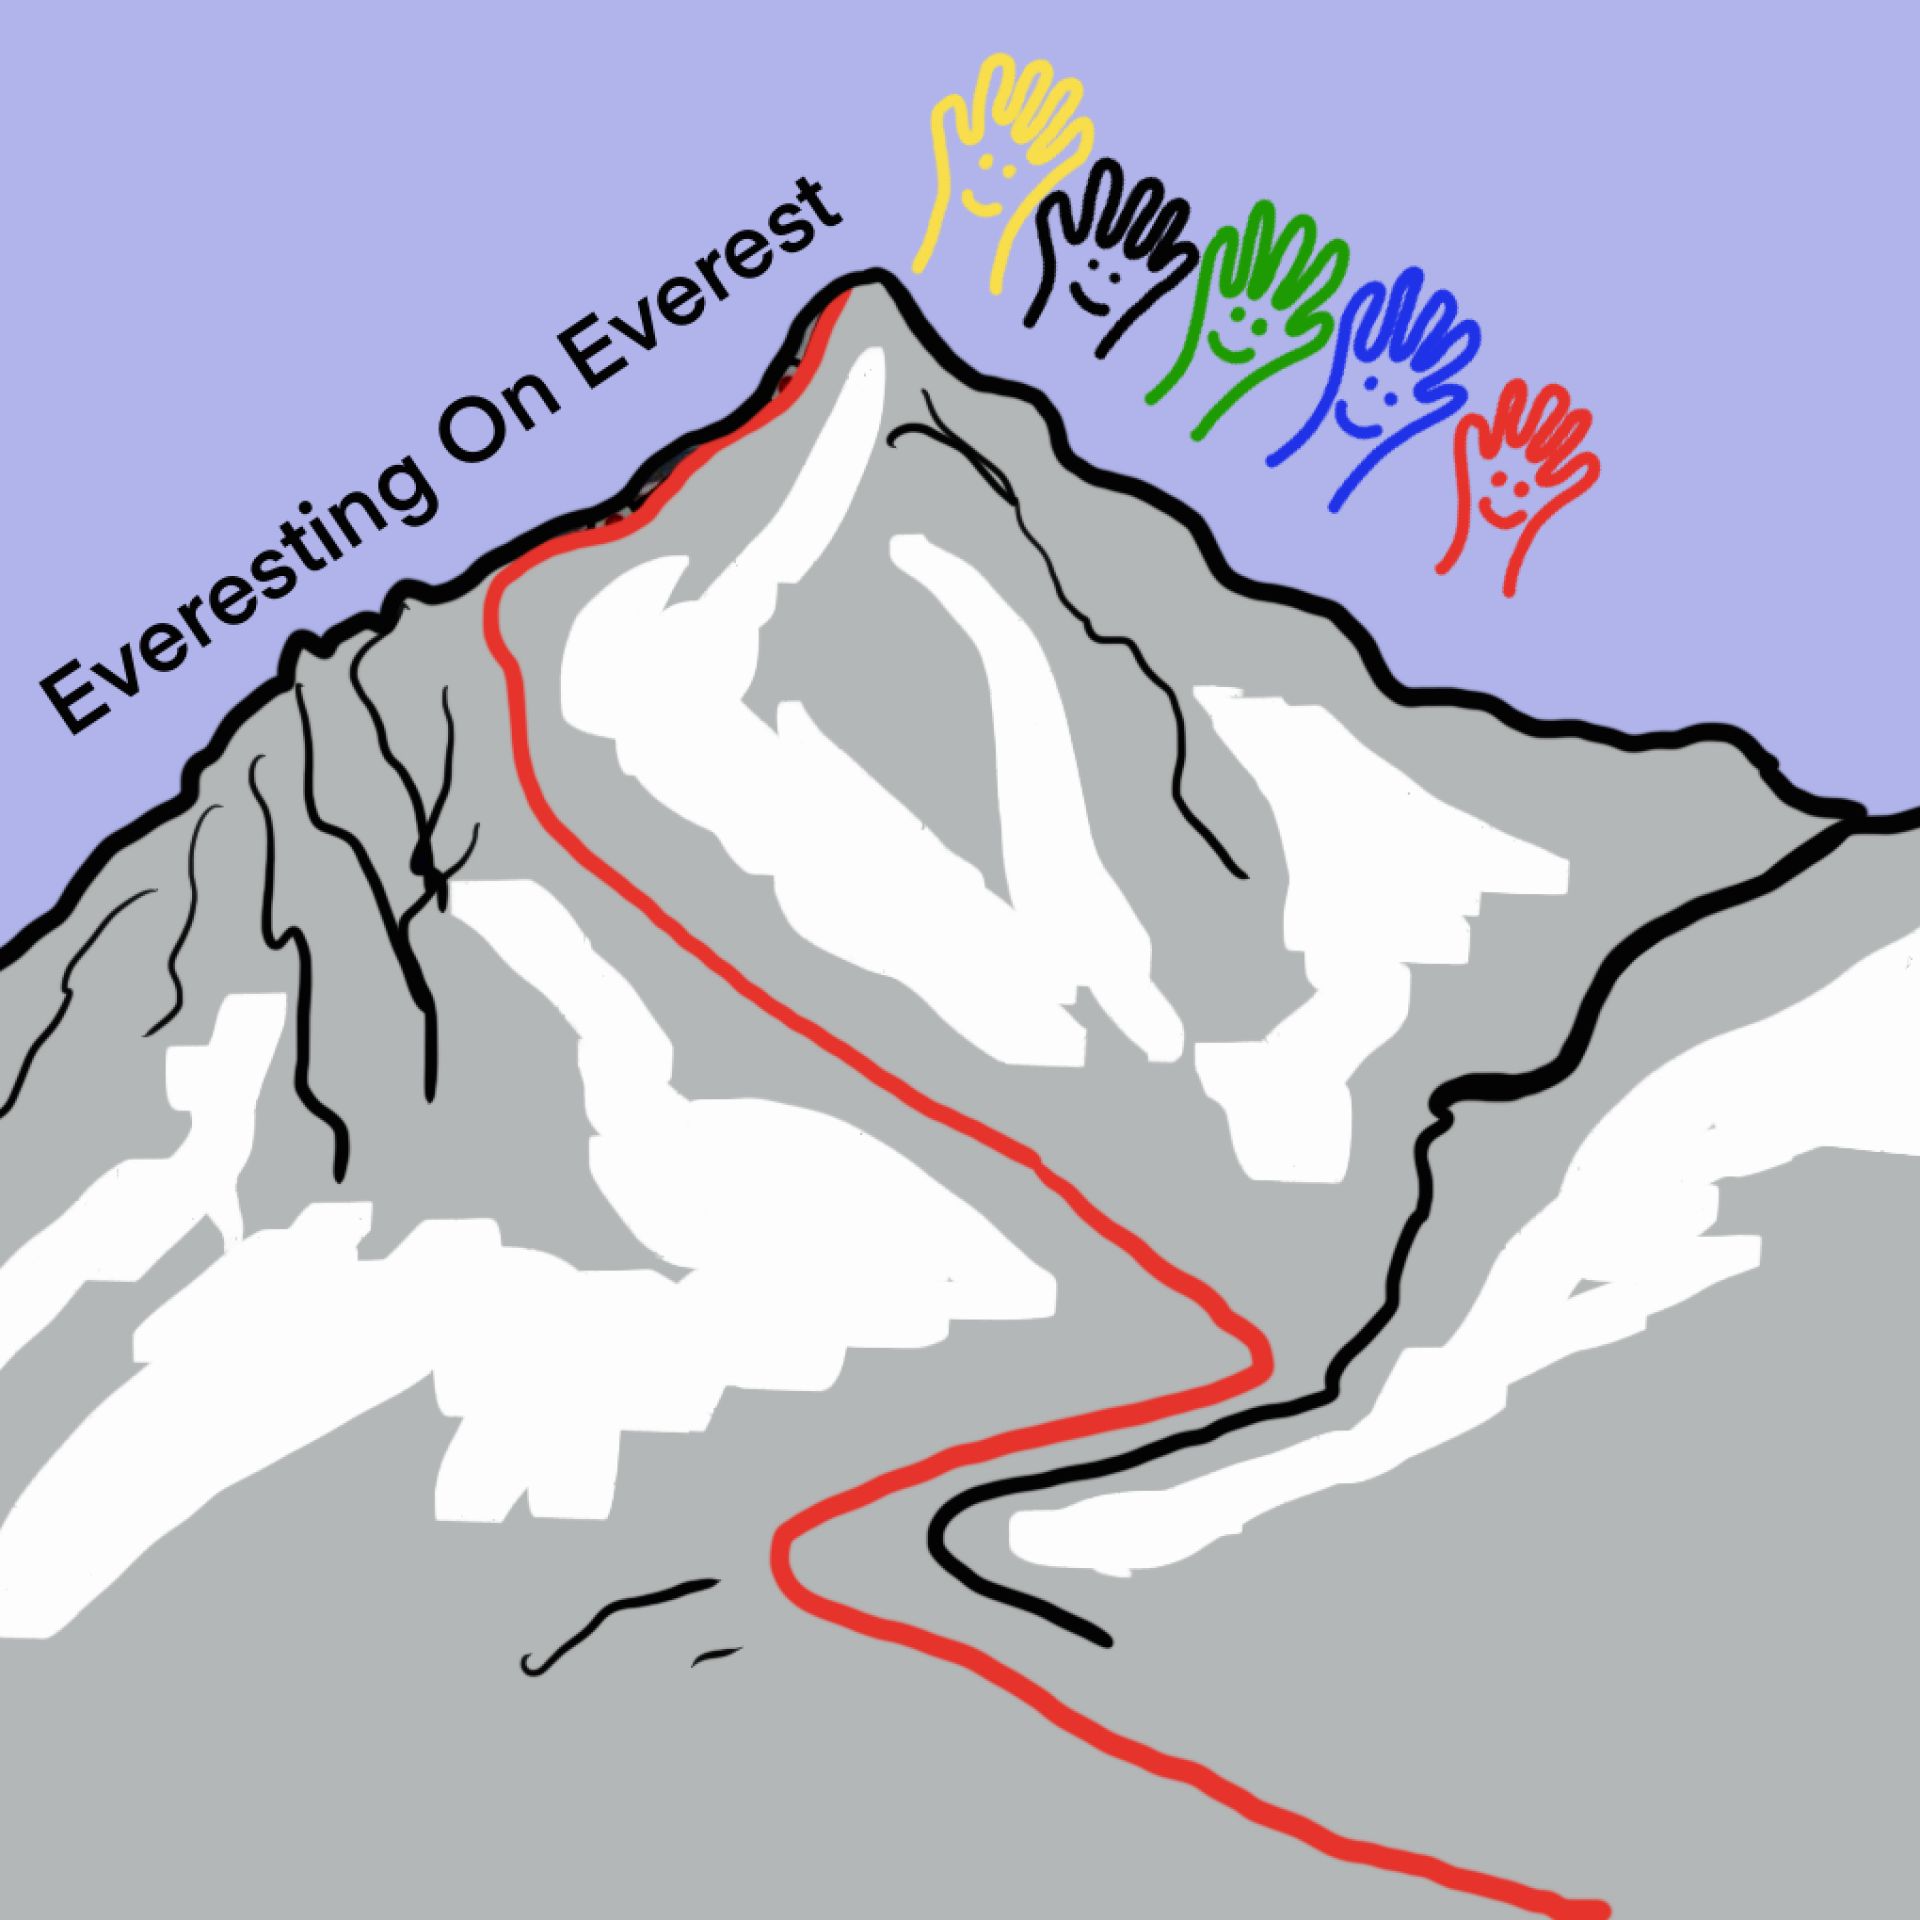 Everesting On Everest for Malabon